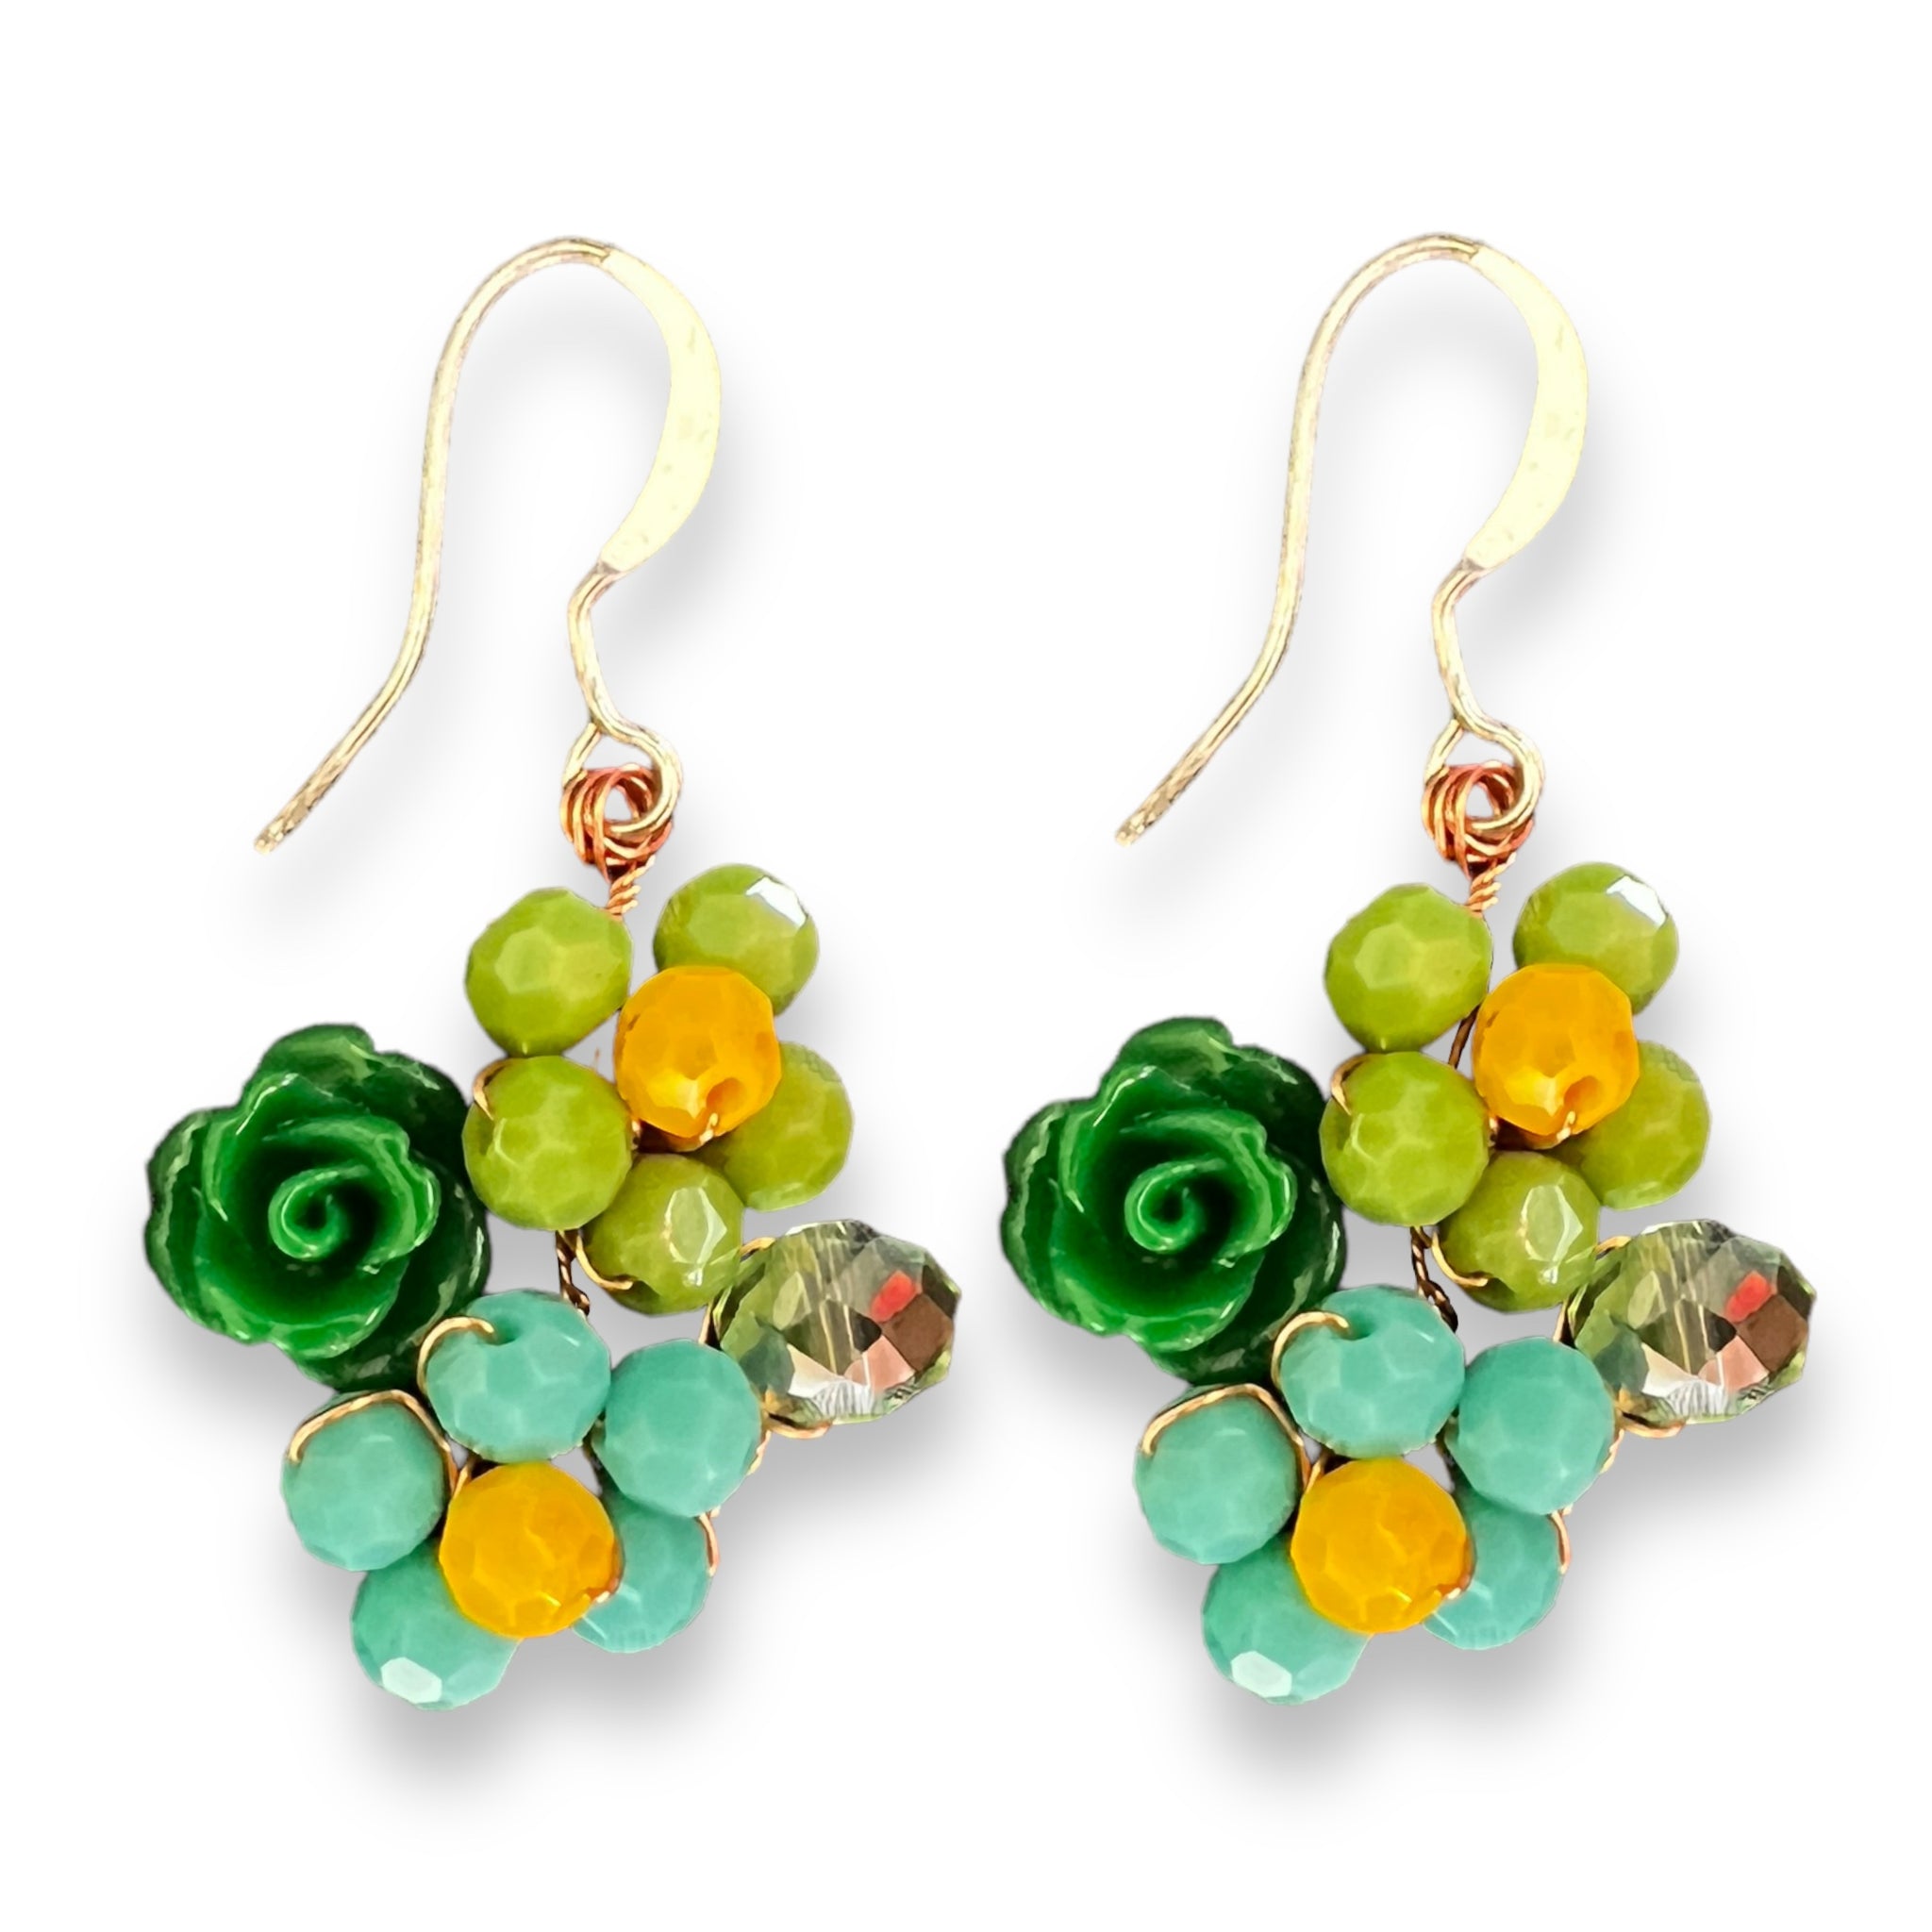 Handmade Earrings Floral Green Blue Beads Jewelry